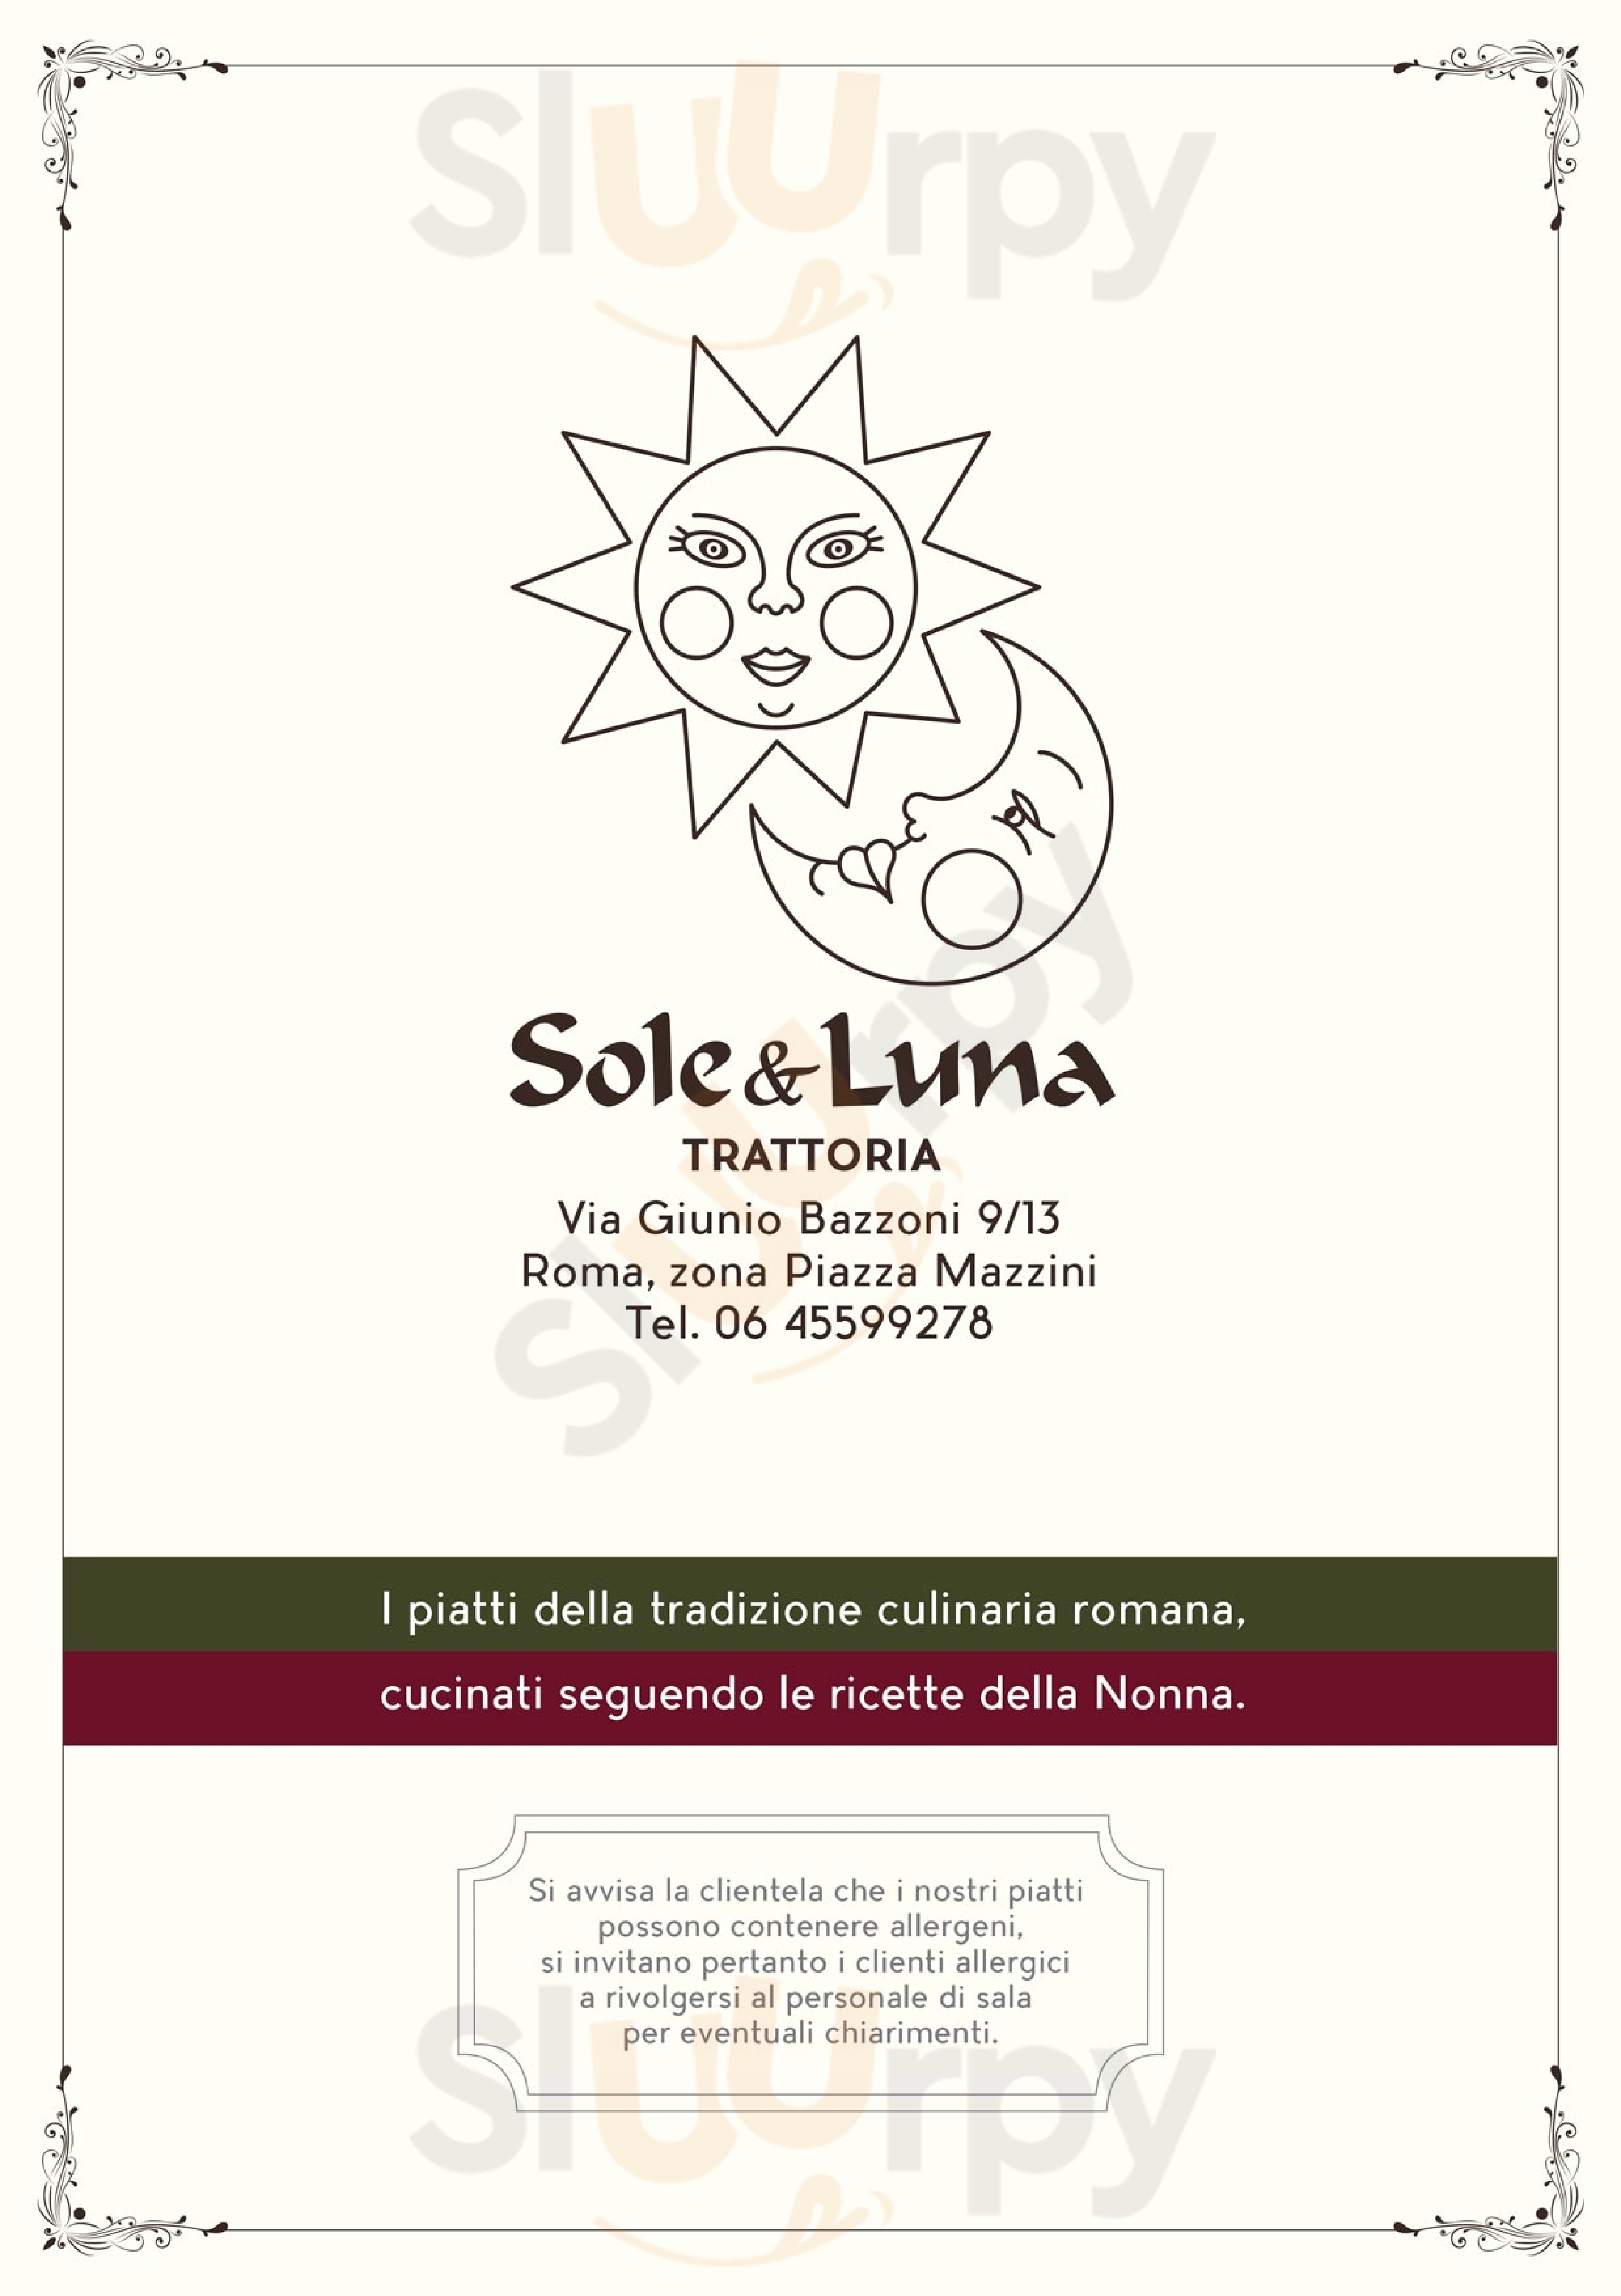 Sole & Luna Roma menù 1 pagina